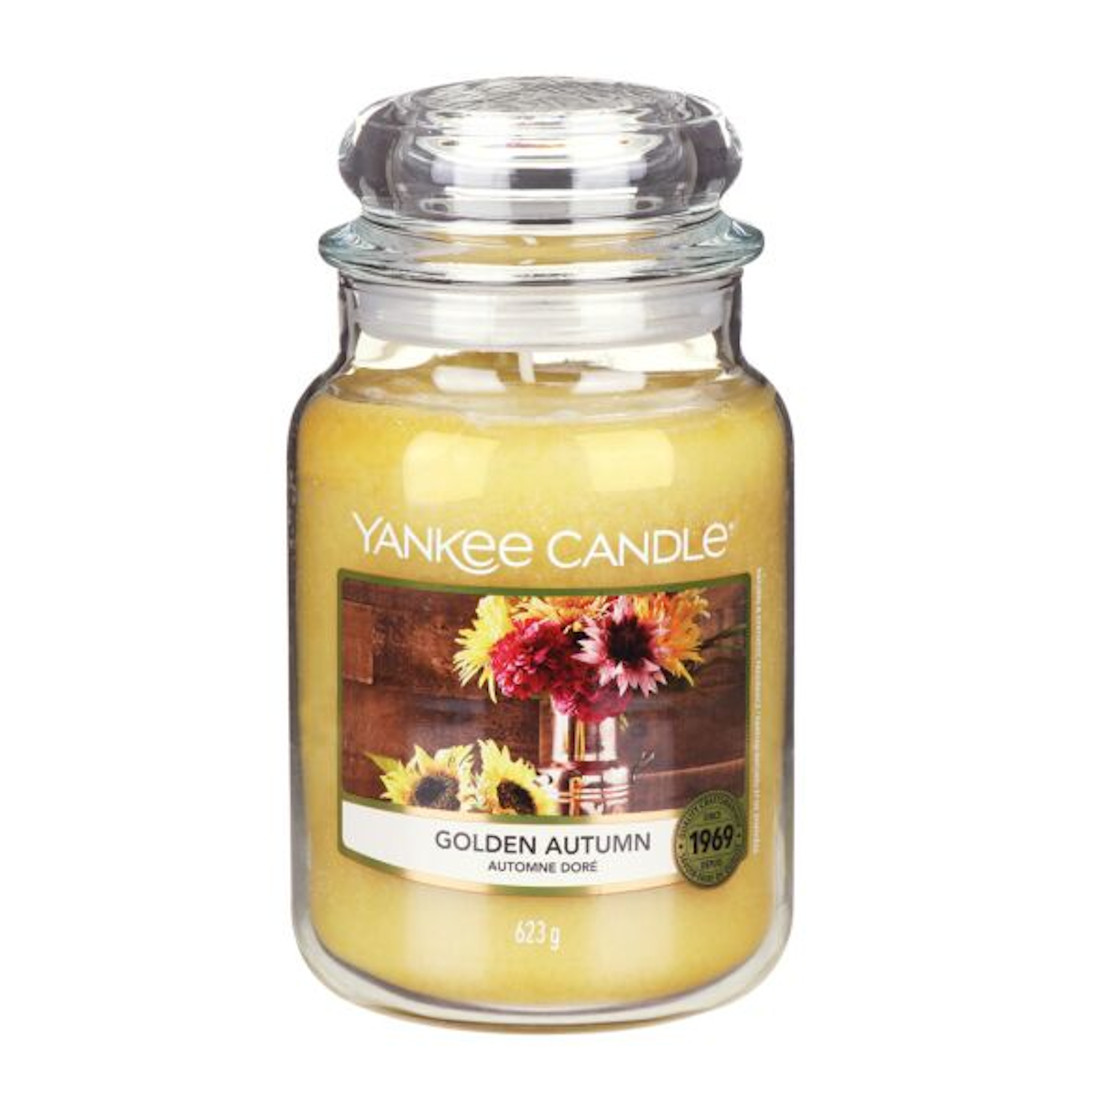 Yankee Candle Golden Autumn Large Jar